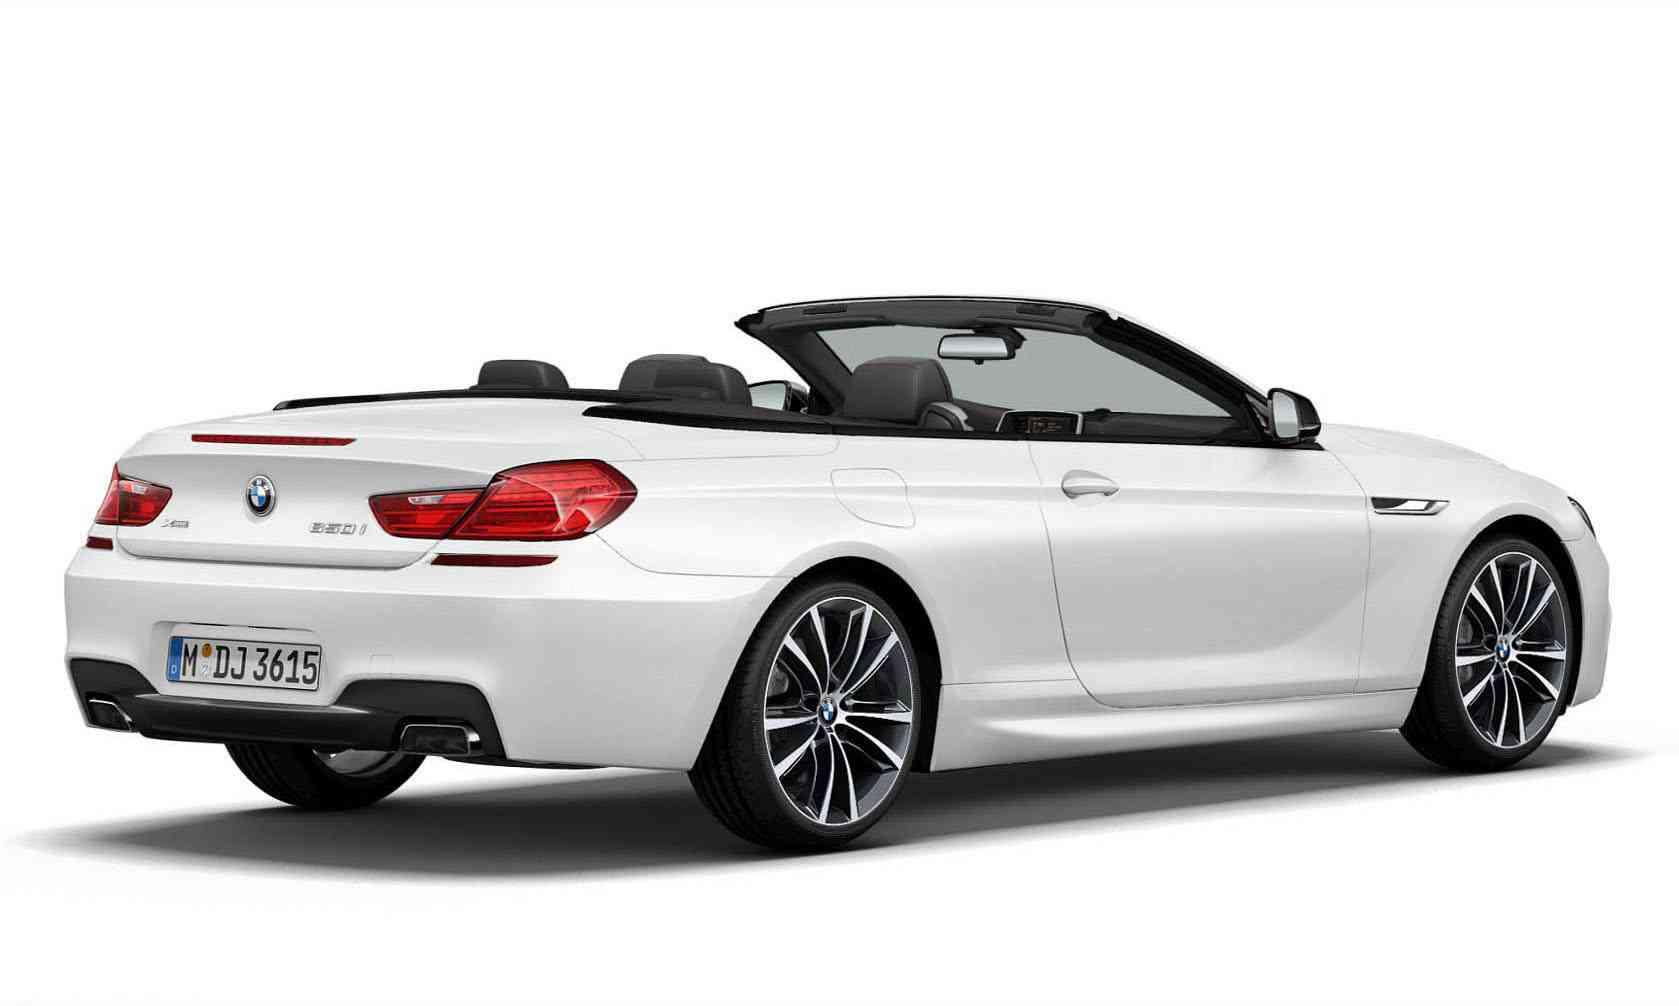 2014 BMW 6 Series Convertible Frozen Brilliant White Edition 11